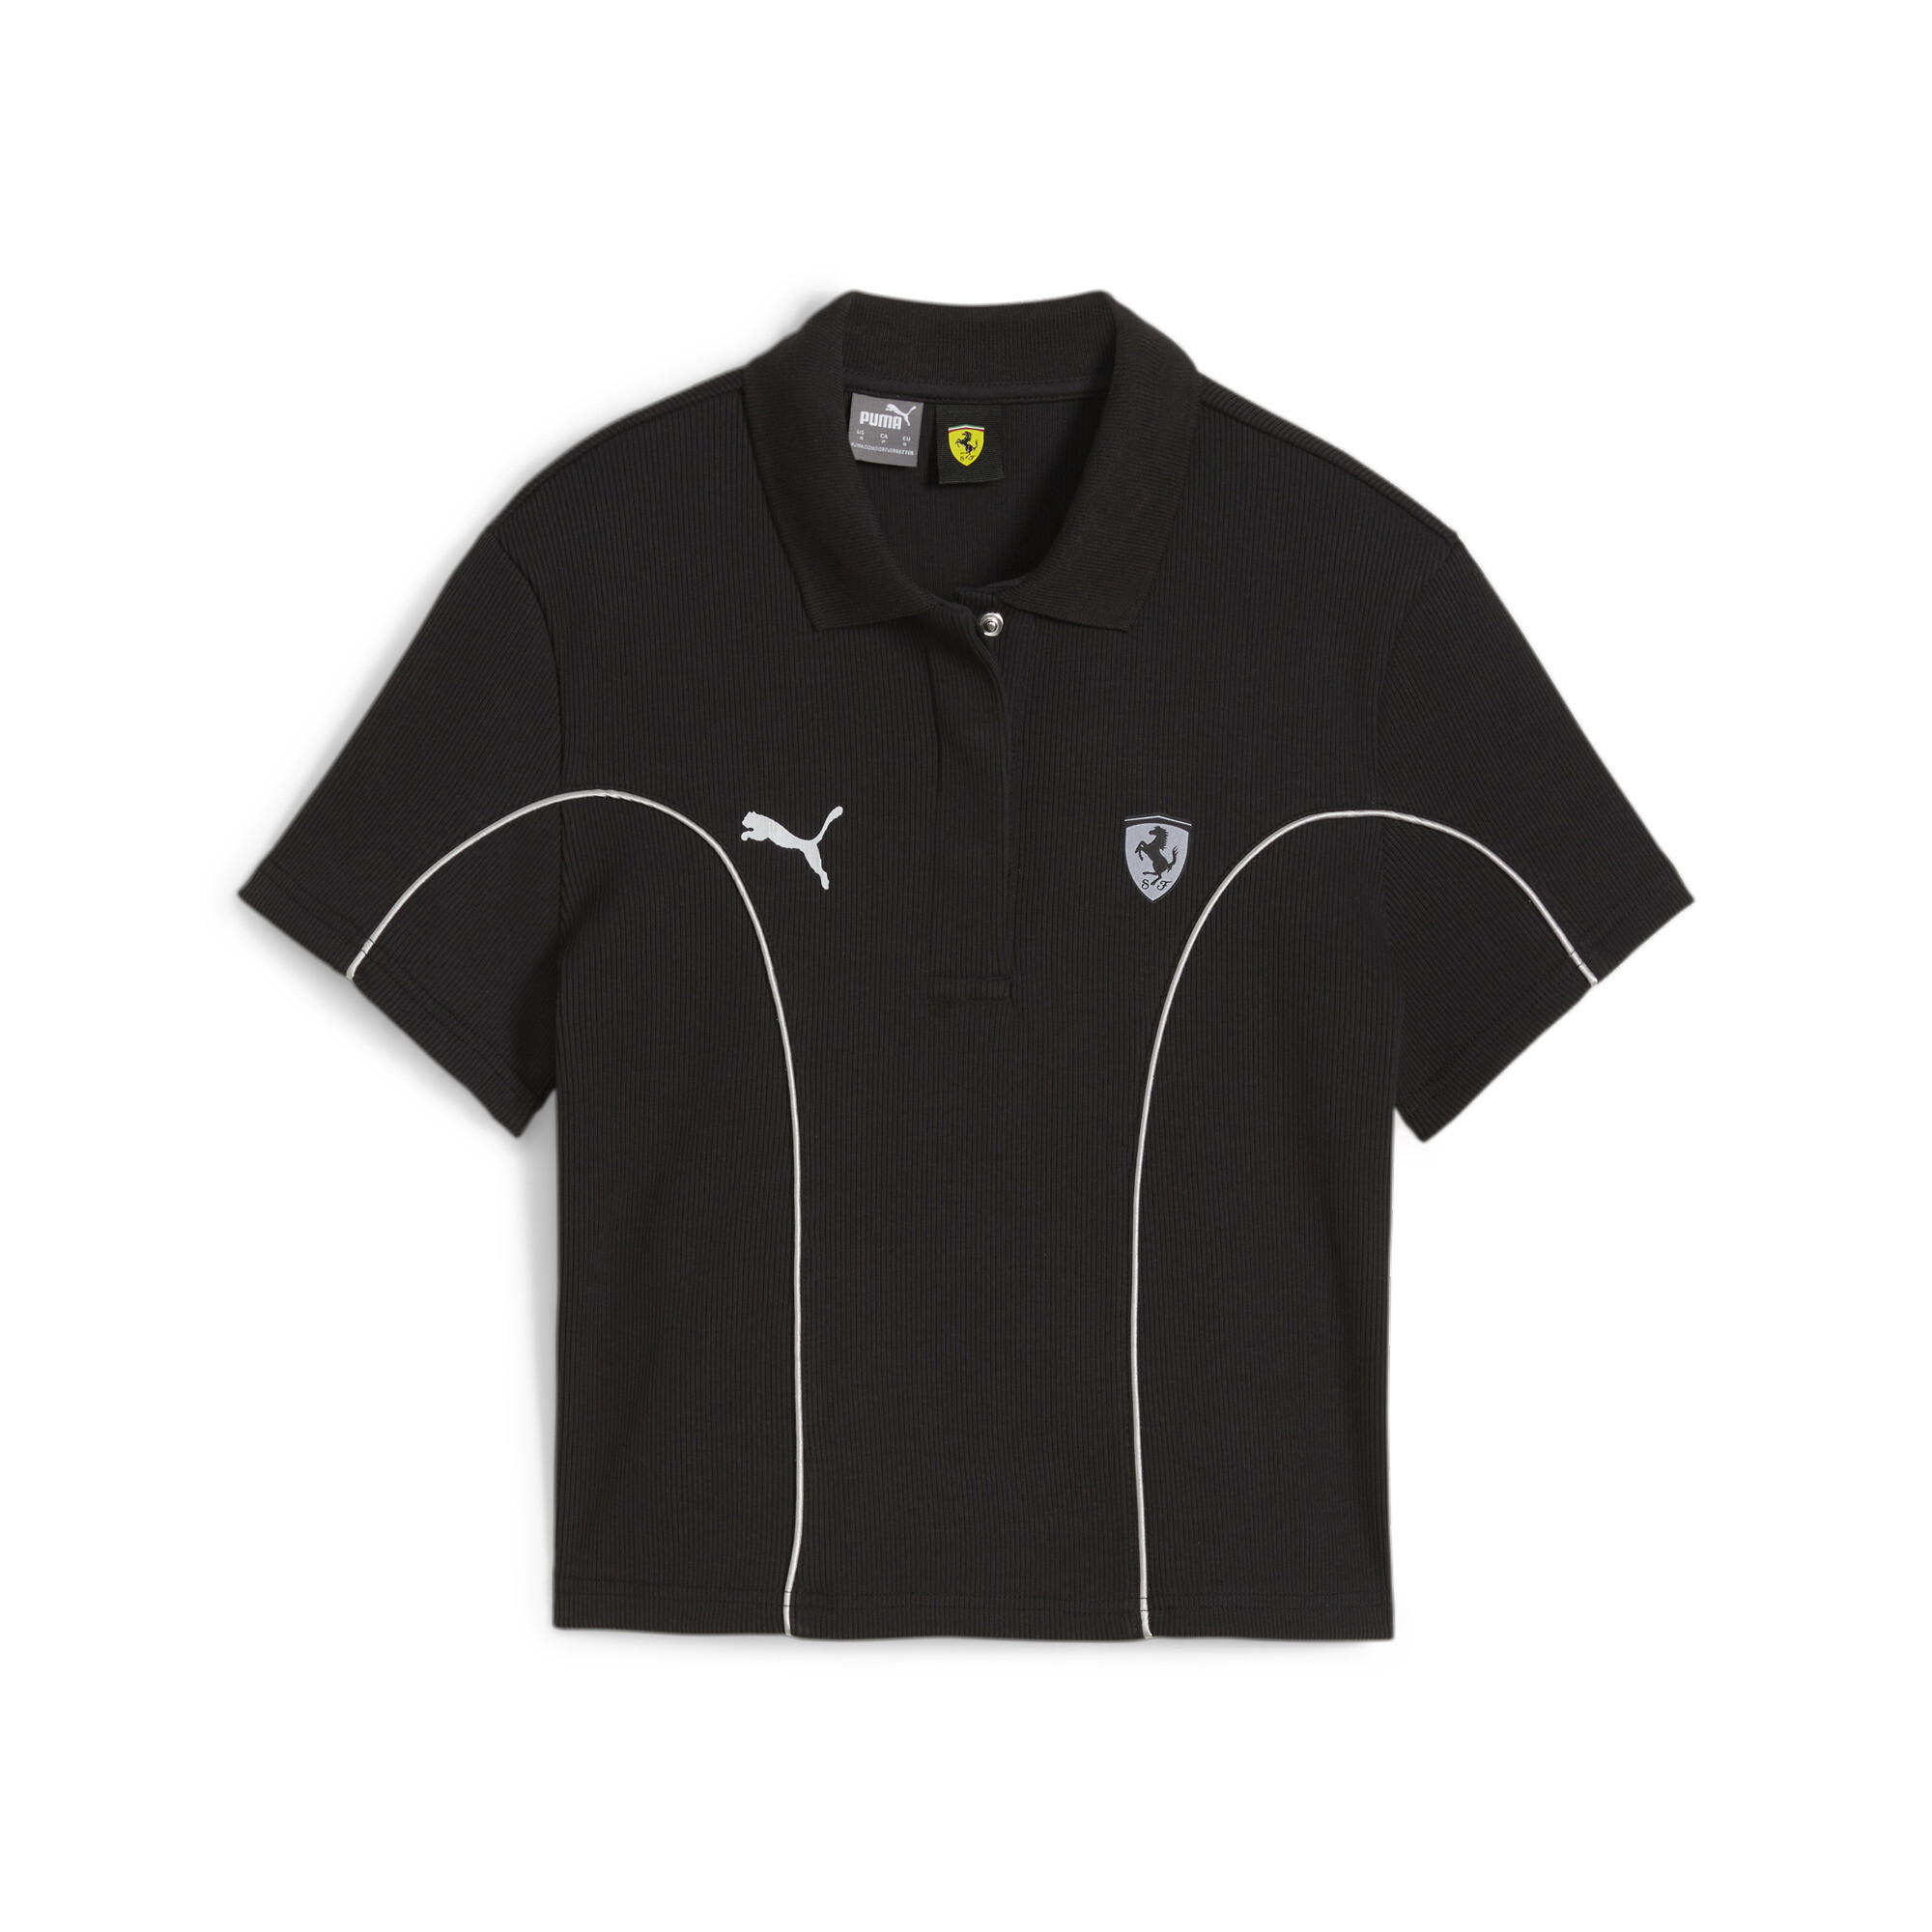 Women's Puma Scuderia Ferrari Style's Motorsport Polo T-Shirt, Black T-Shirt, Size S T-Shirt, Clothing